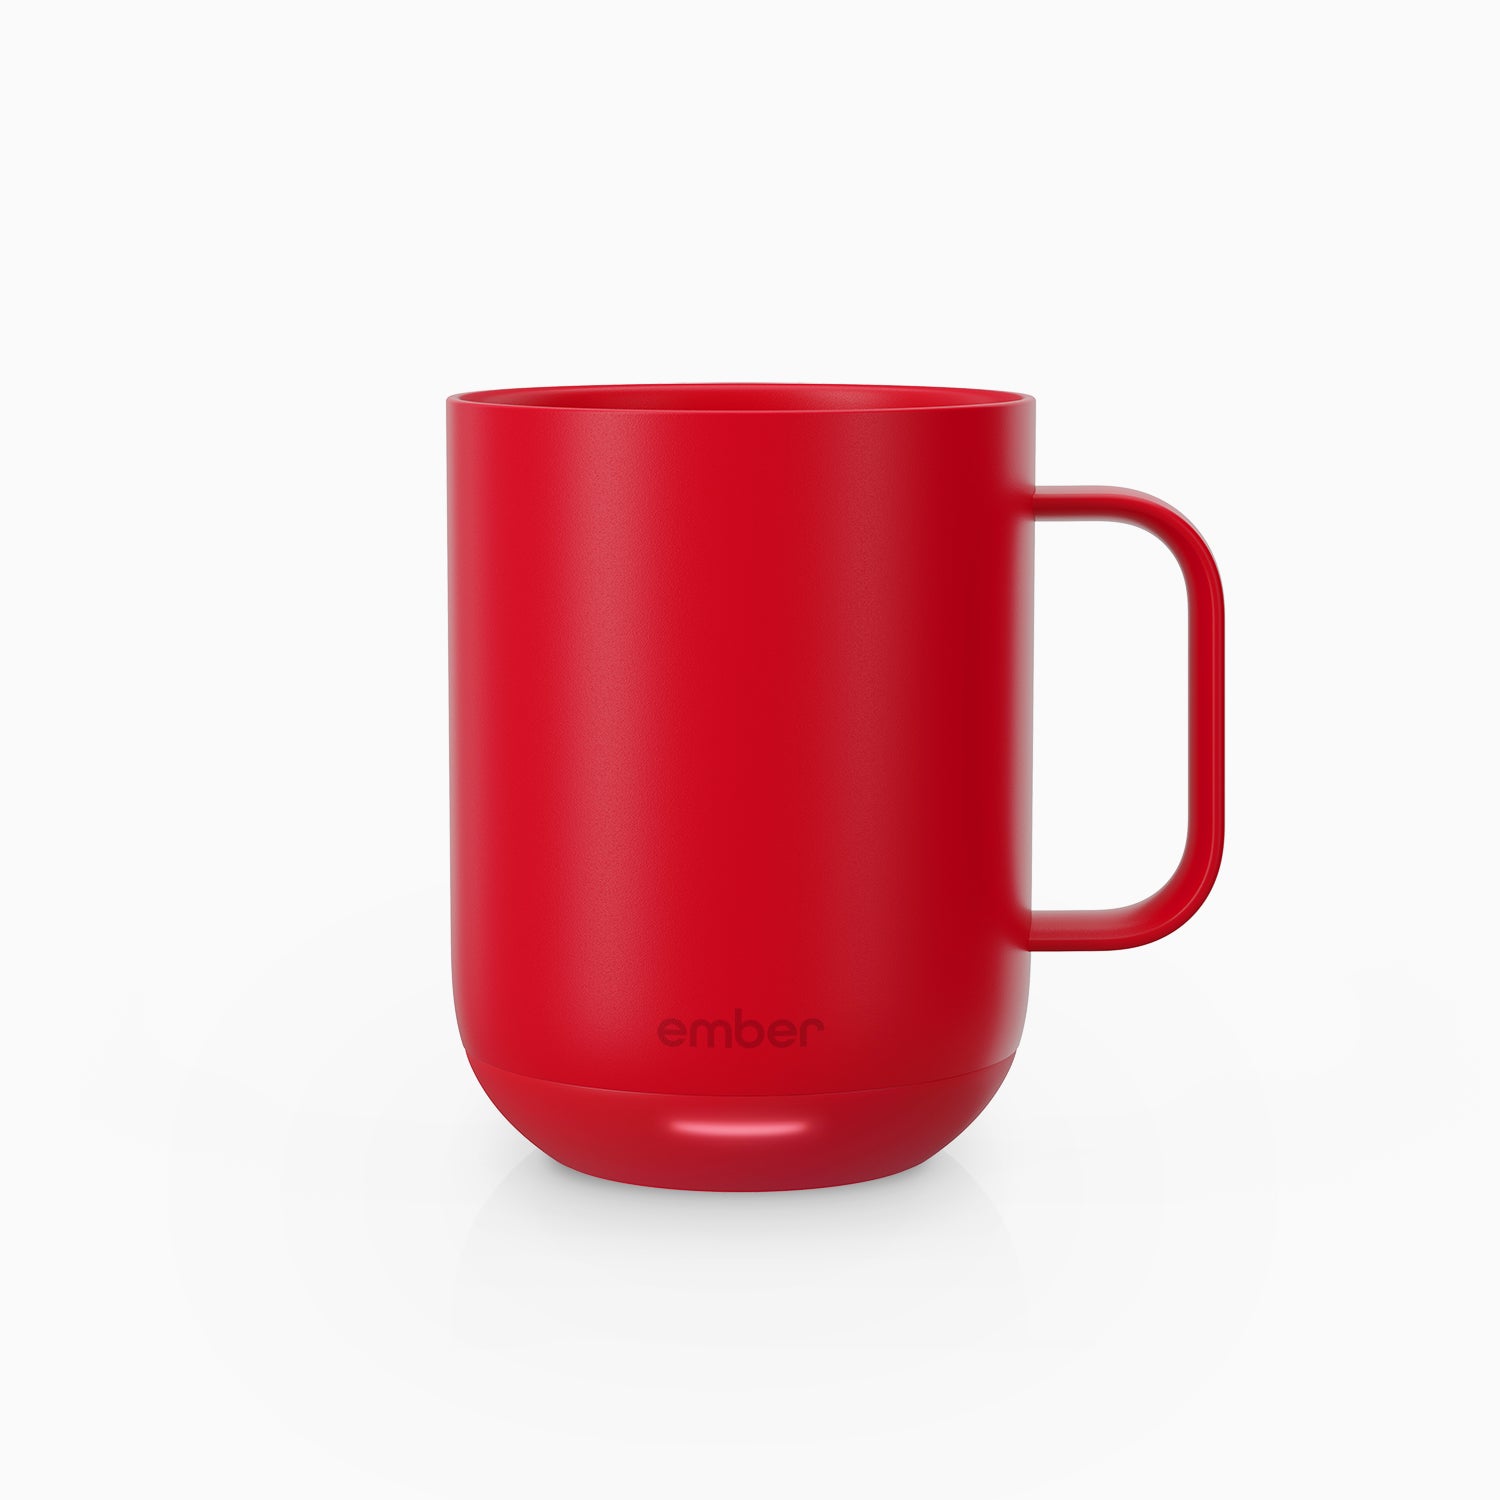 Ember Mug 2 - Heated Coffee Mug, Smart Mug - Ember (RED) Mug - Ember®